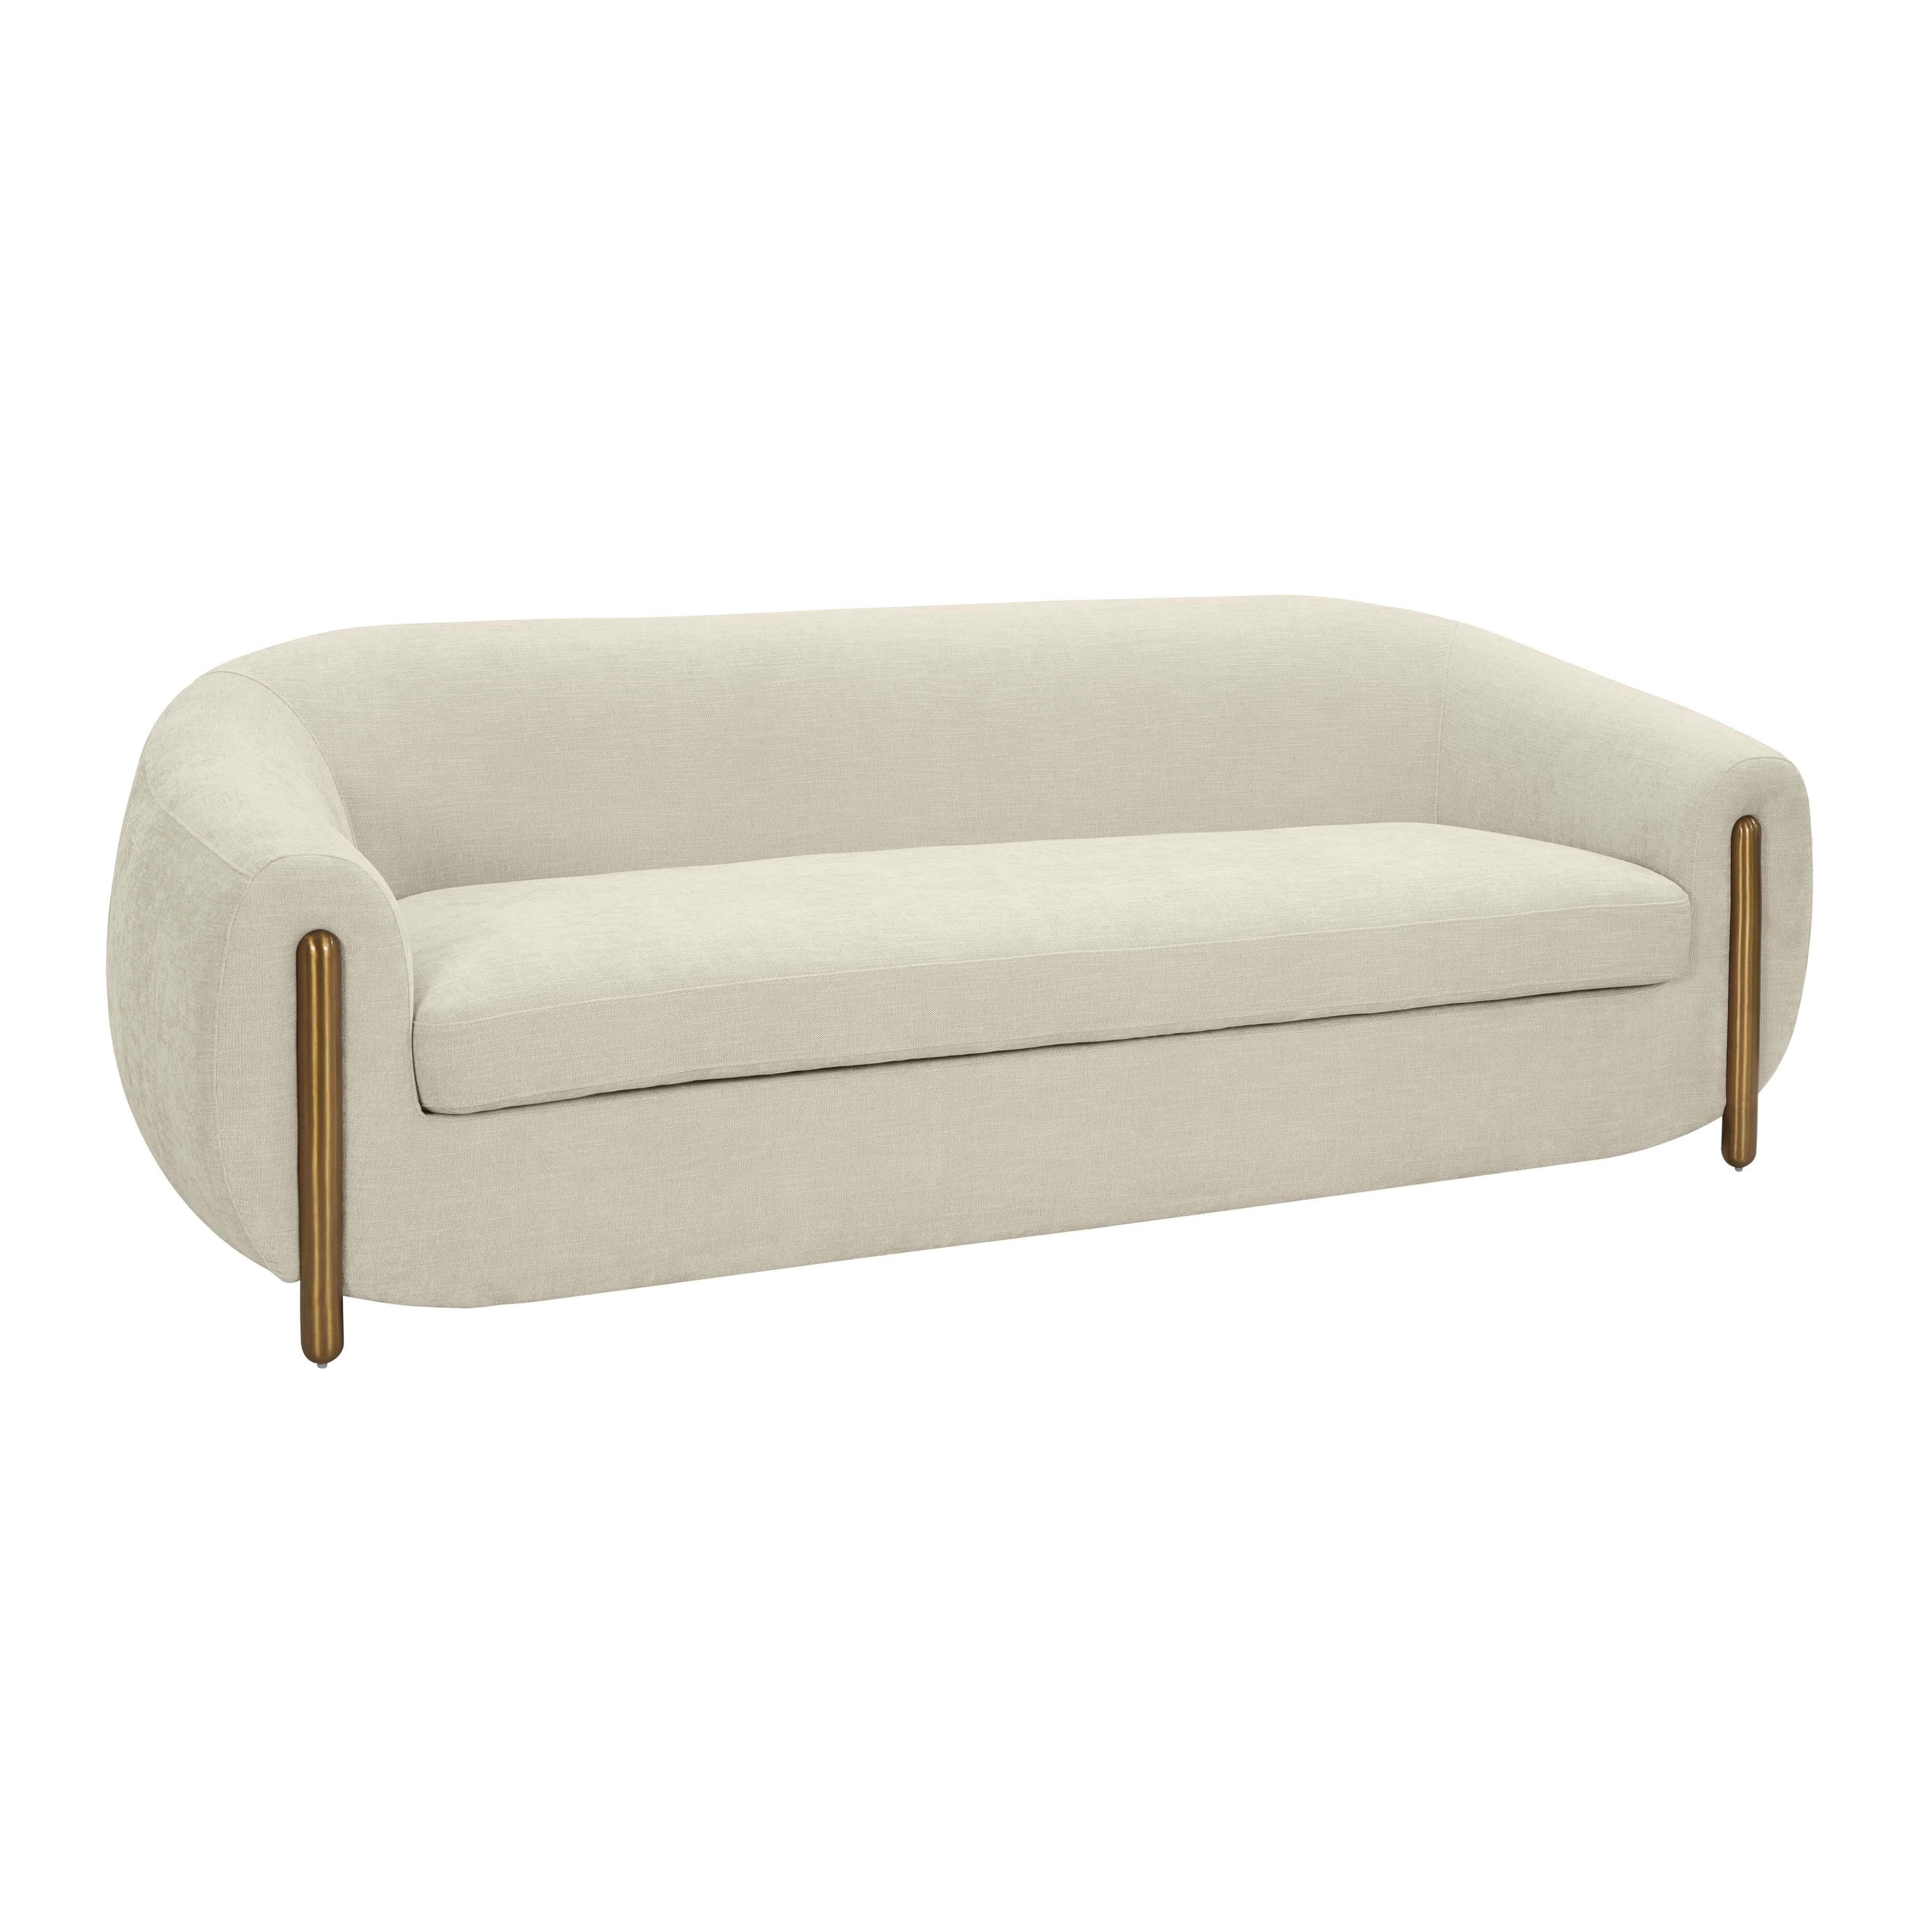 Tov Furniture Sofas - Lina Cream Chenille Textured Sofa